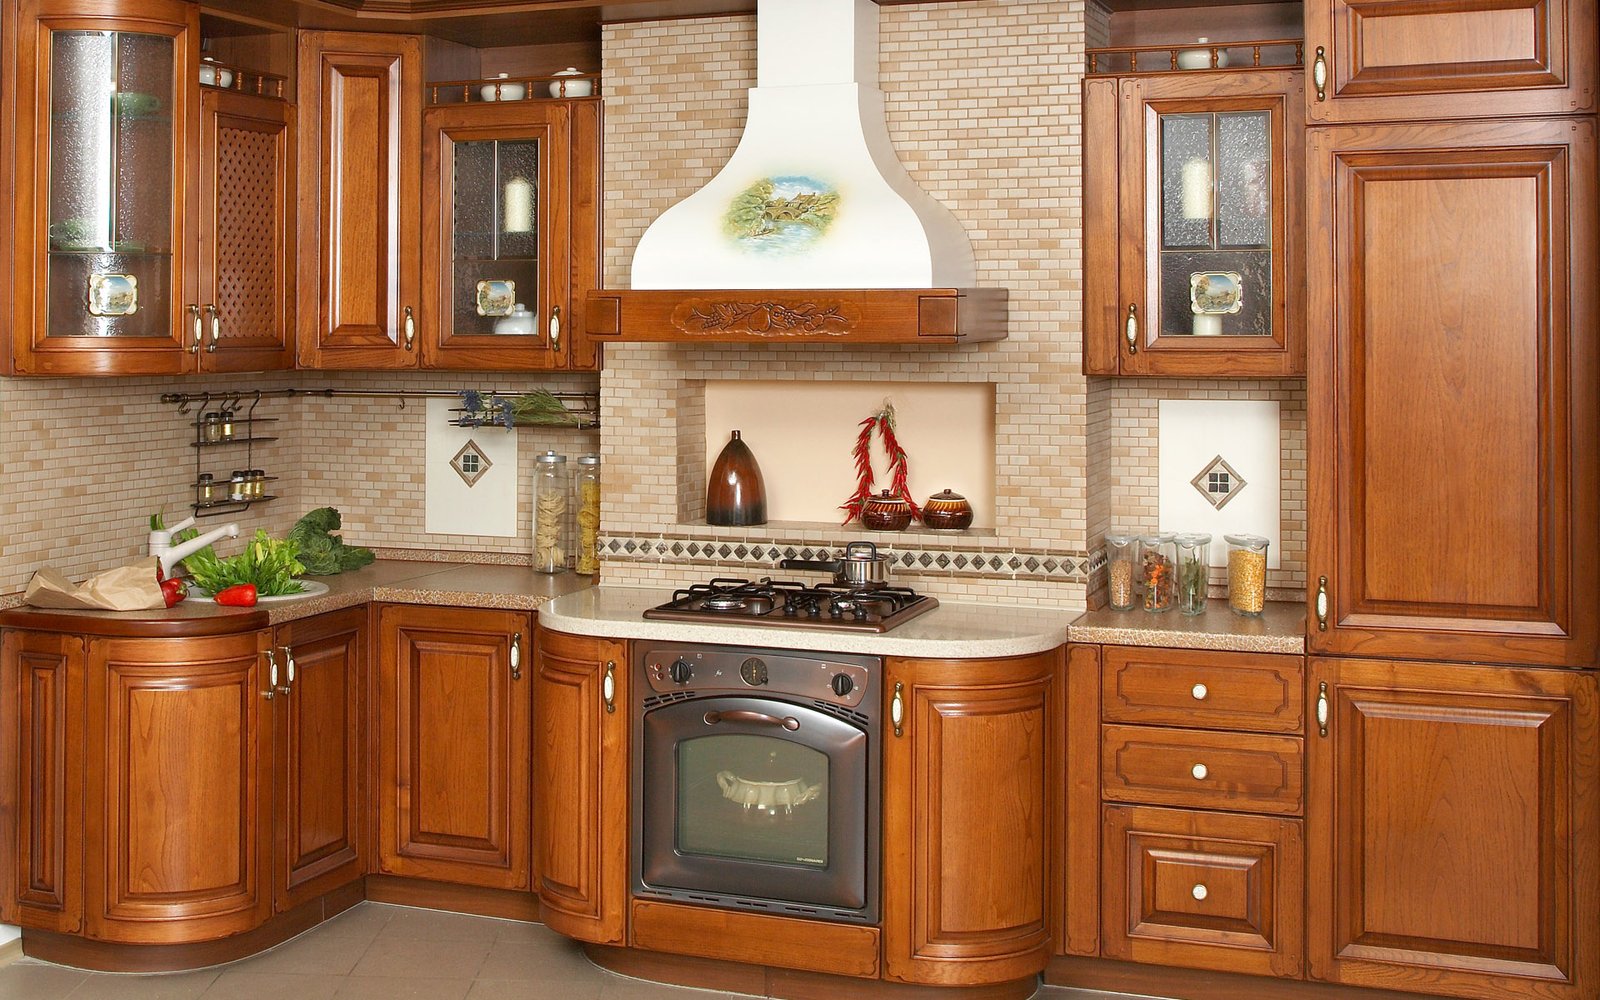 luxurious-kitchen-interior-design-idea luxurious kitchen interior design idea